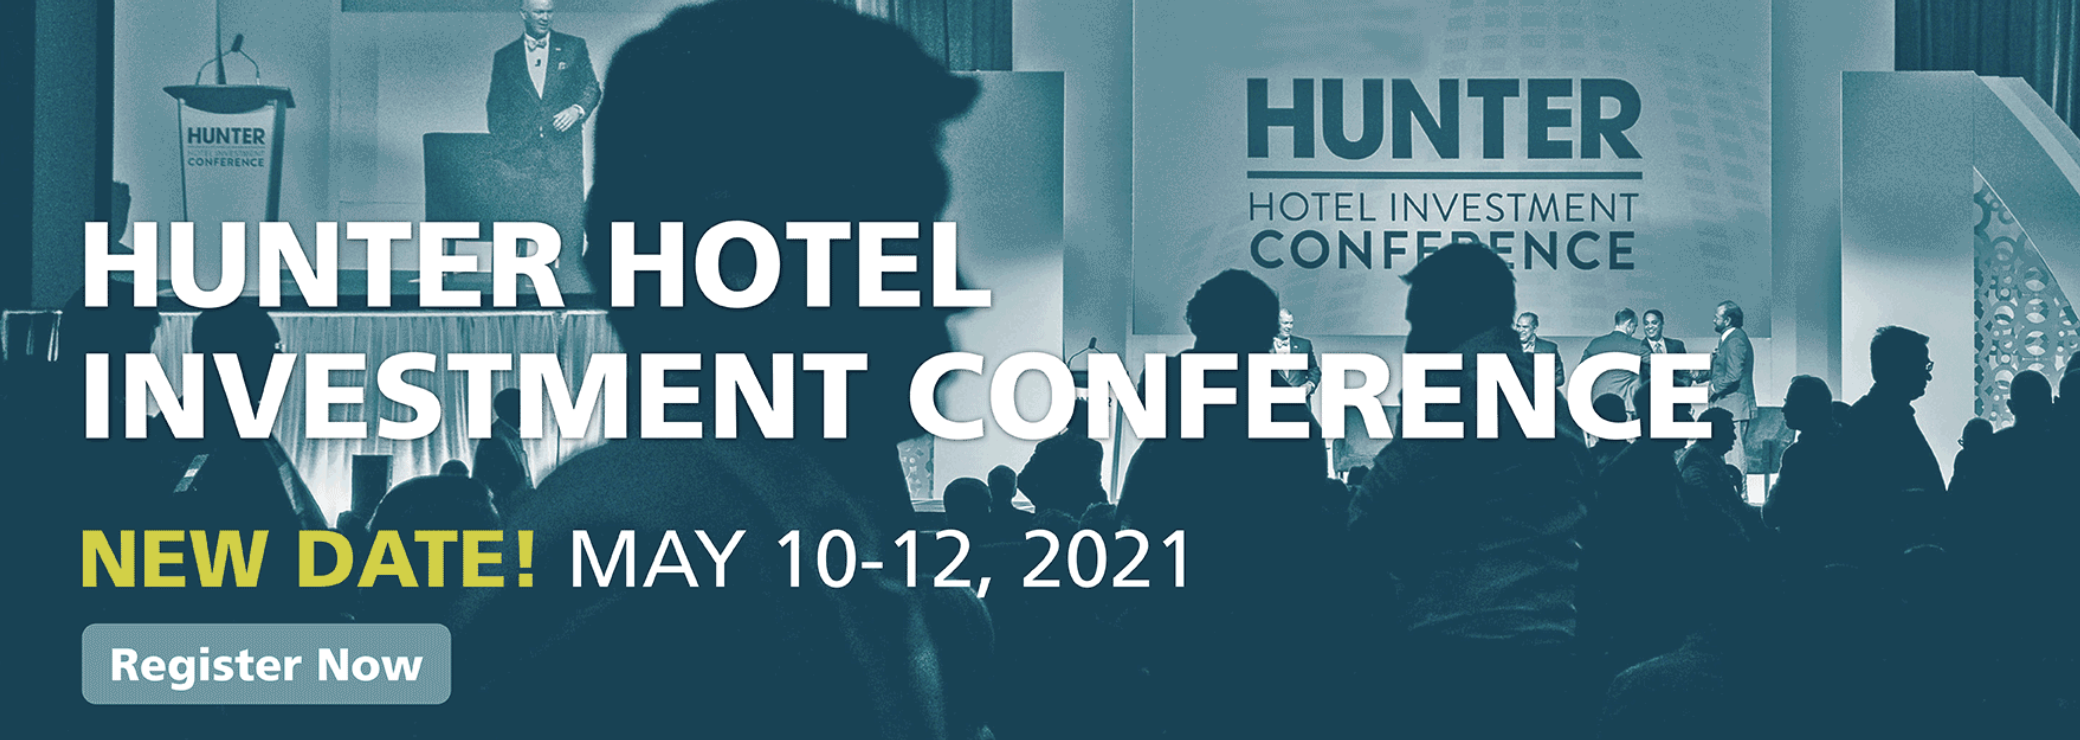 Hunter Conference 2021